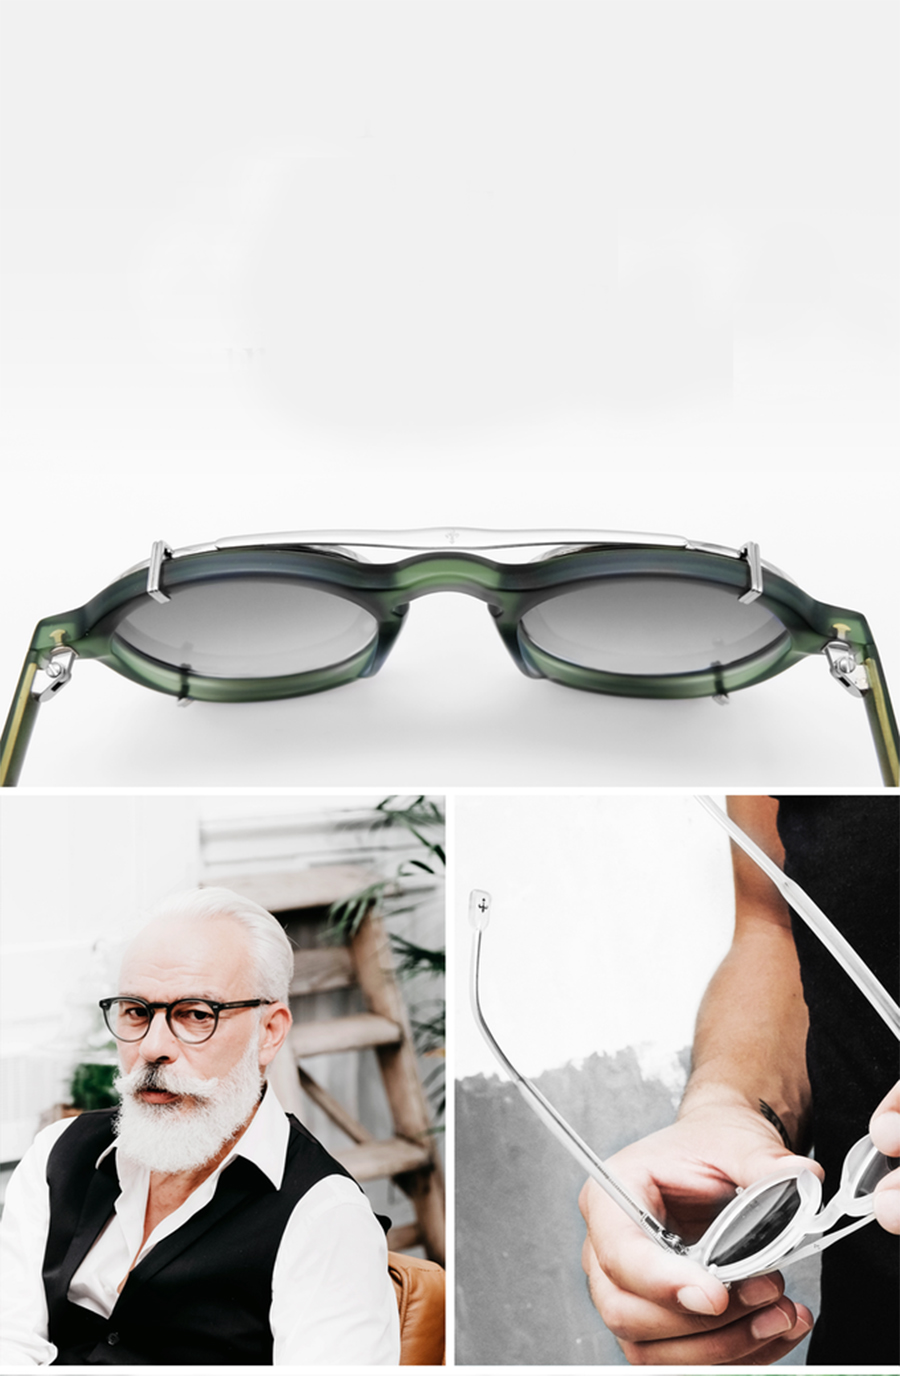 Lance 2.0 Smart Glasses 2